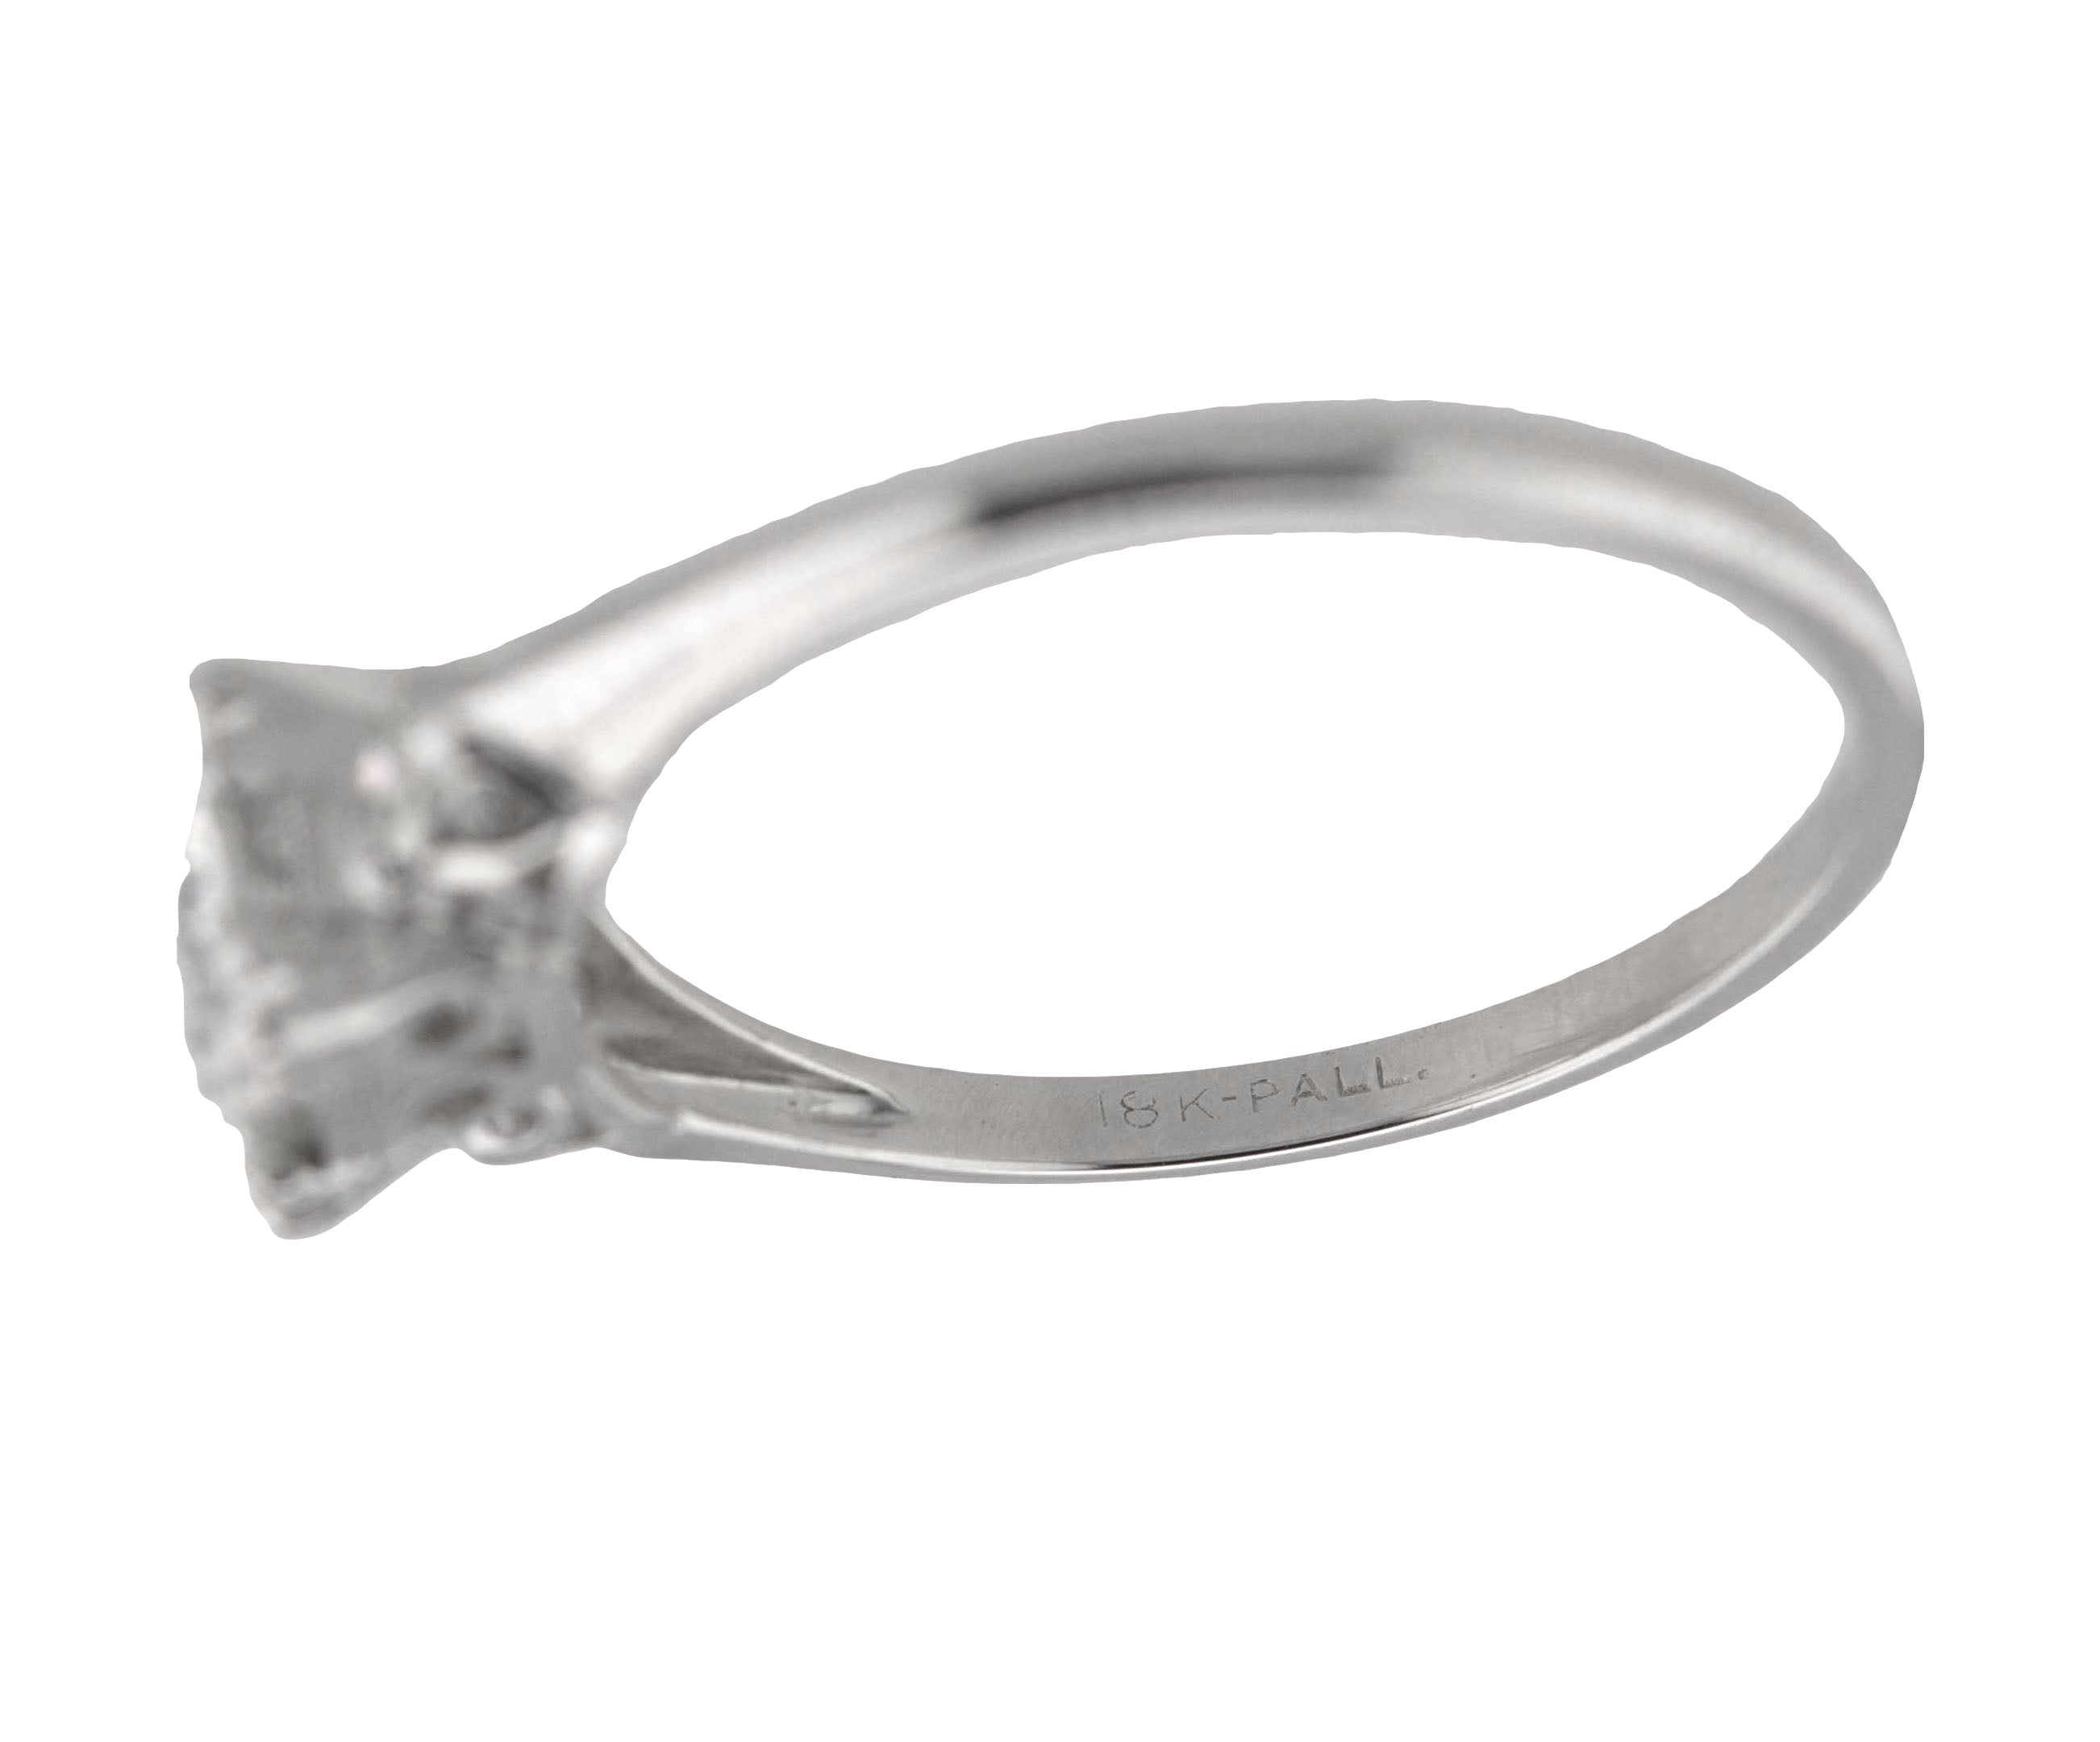 Antique Art Deco 18K White Gold 0.90 CT Old European Cut Diamond Engagement Ring